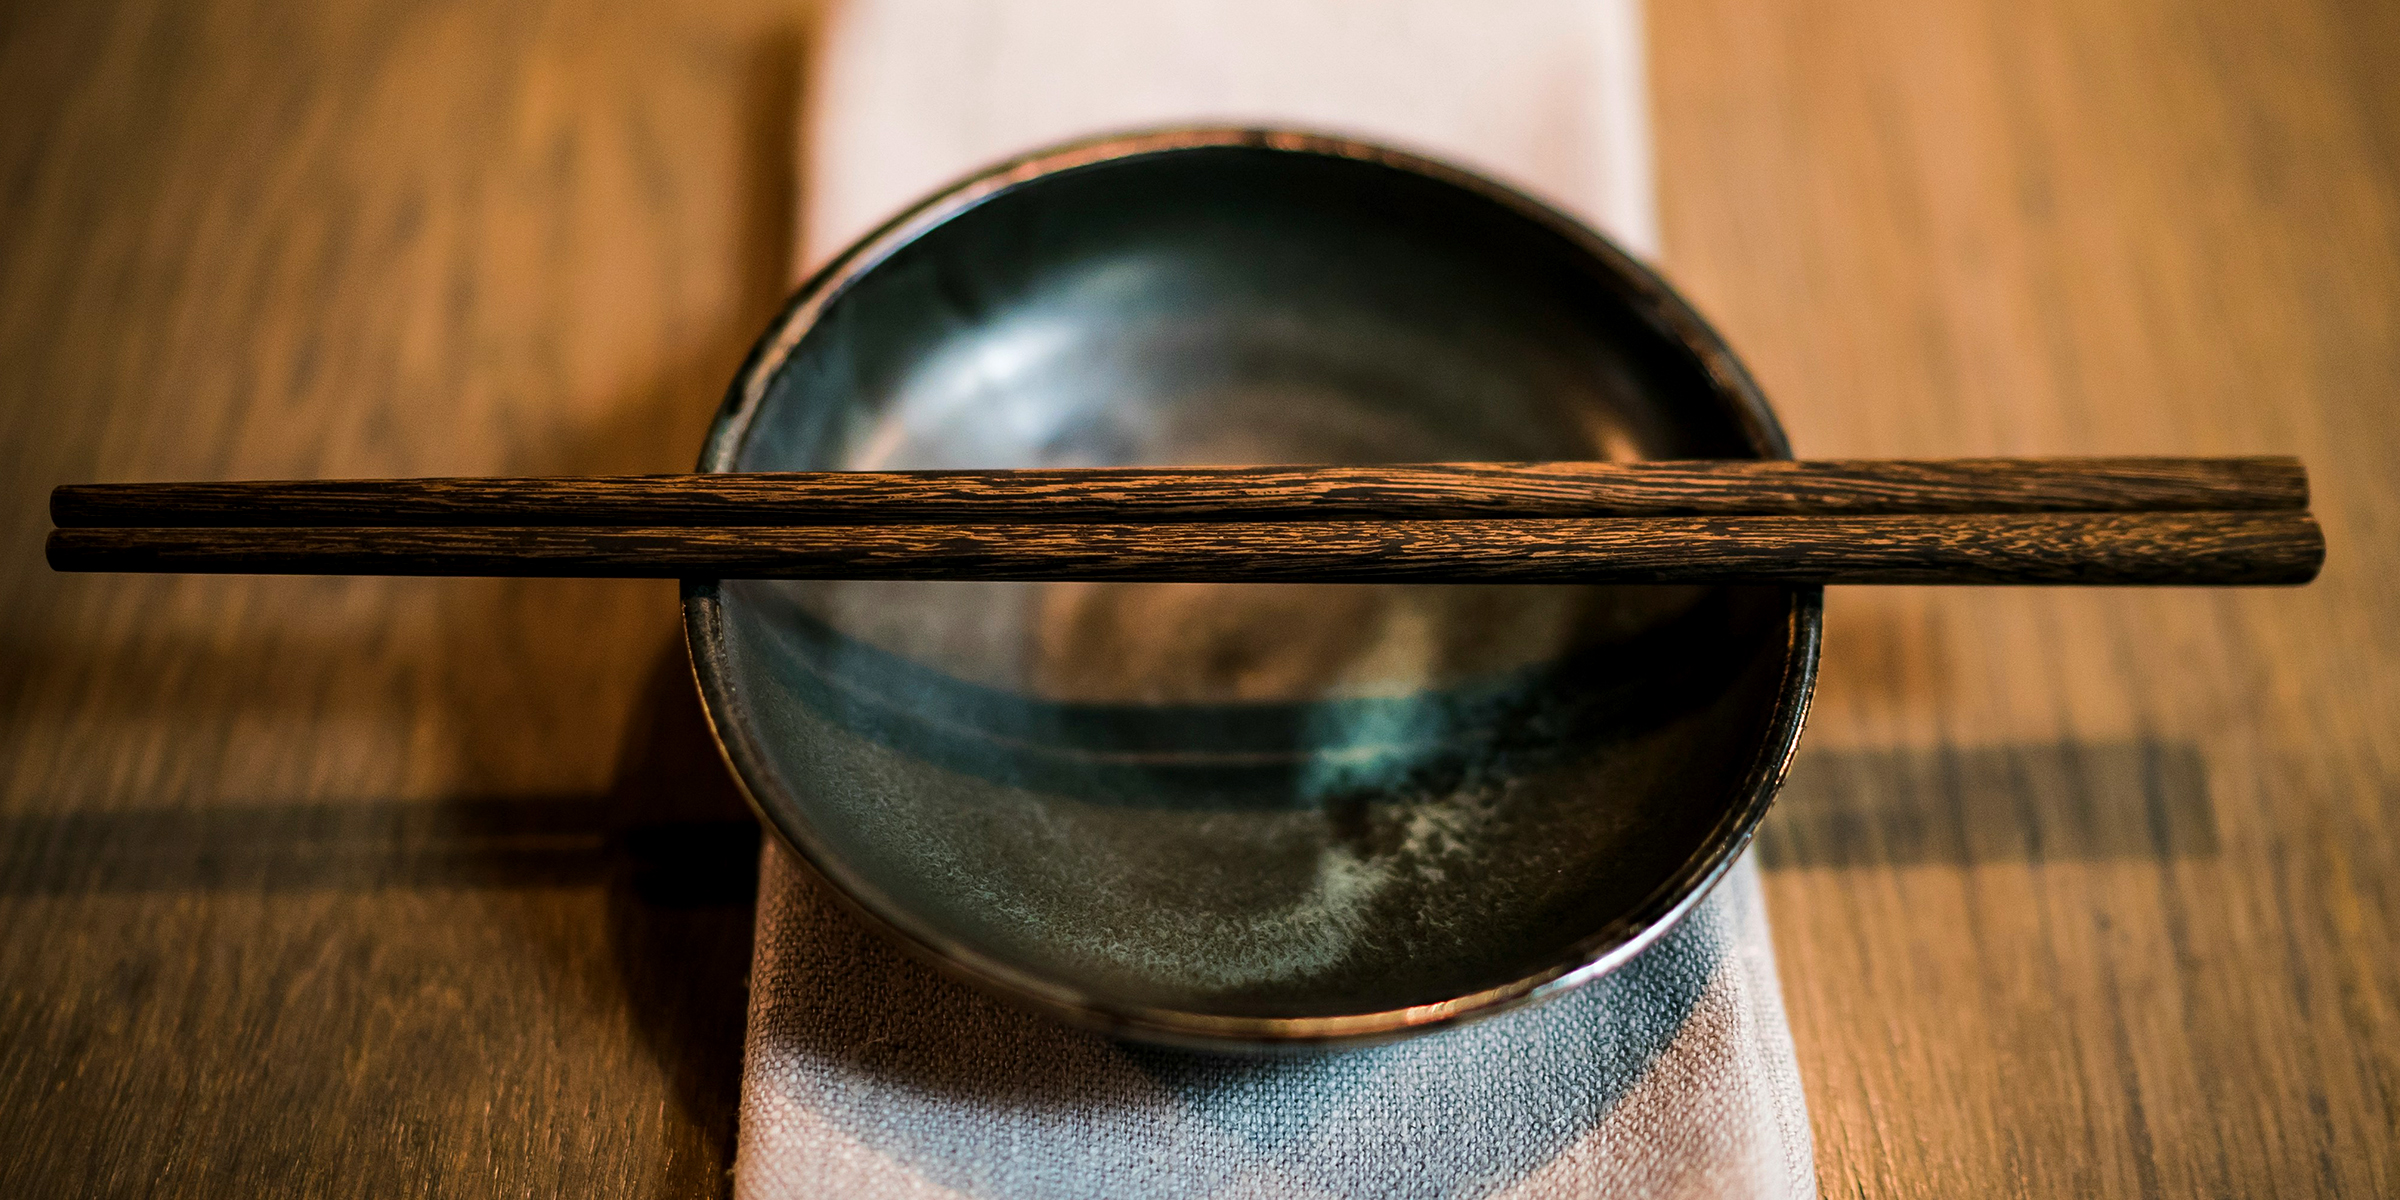 Wooden chopsticks | Source: unsplash.com/@juanencalada